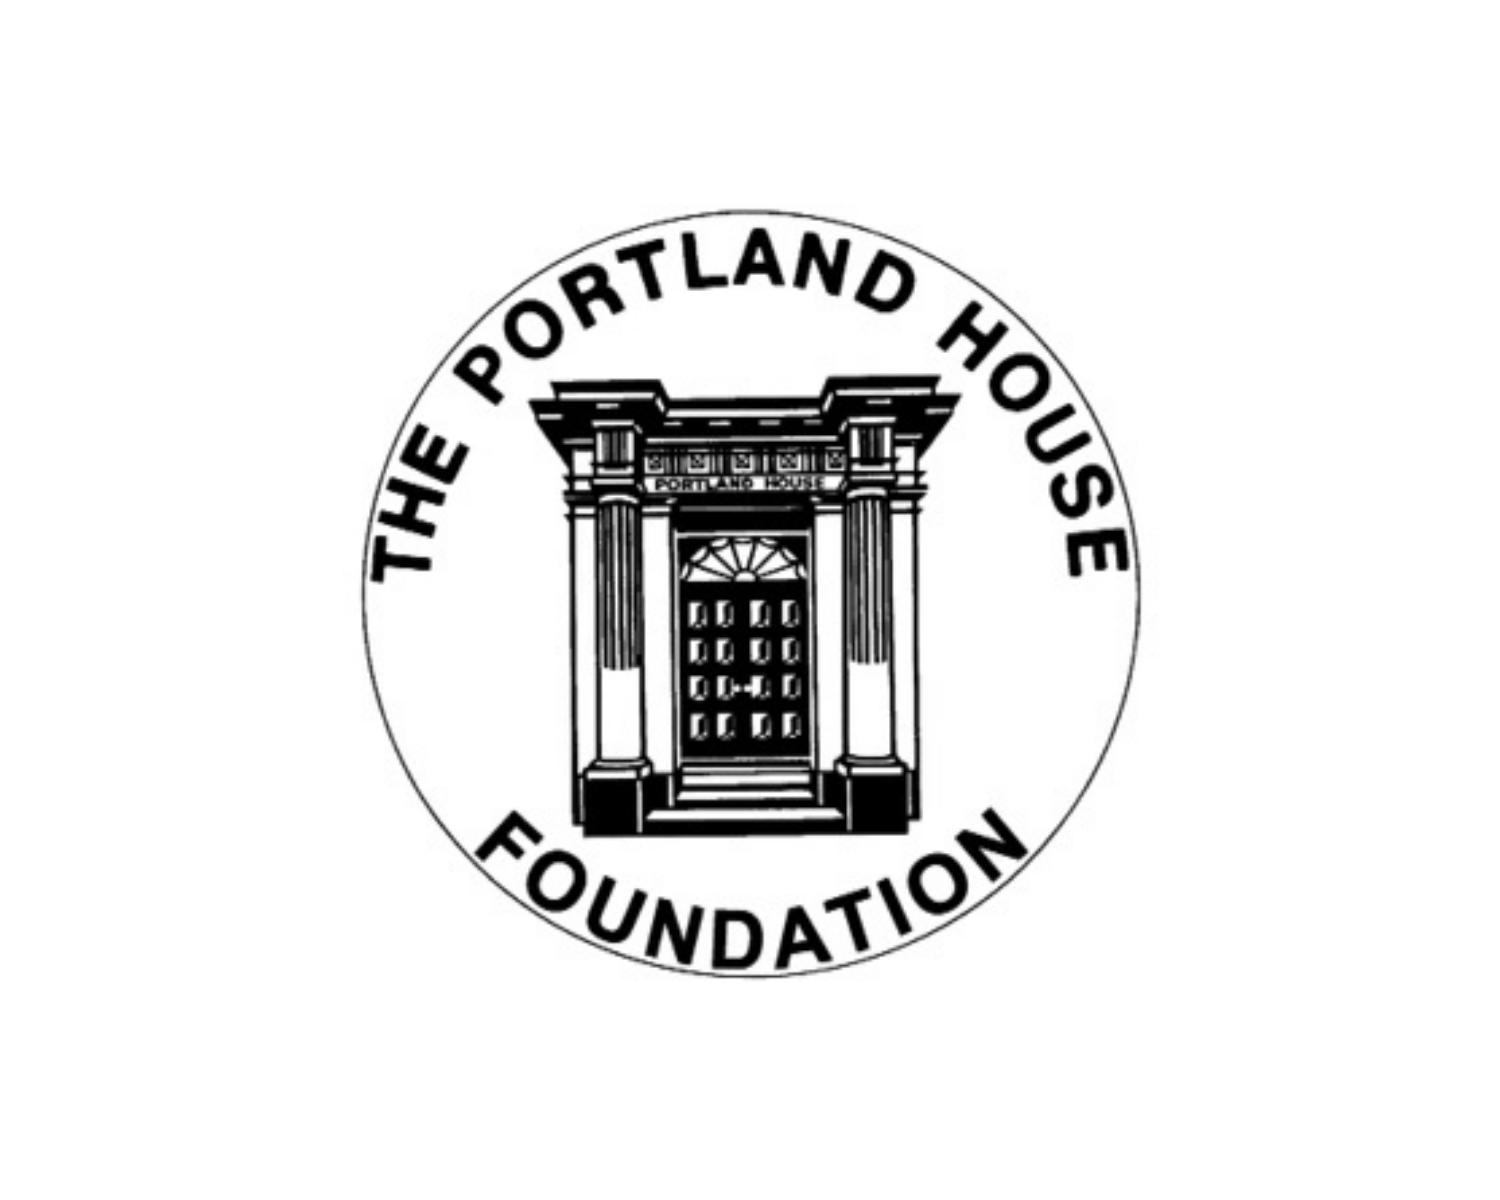 The Portland House Foundation